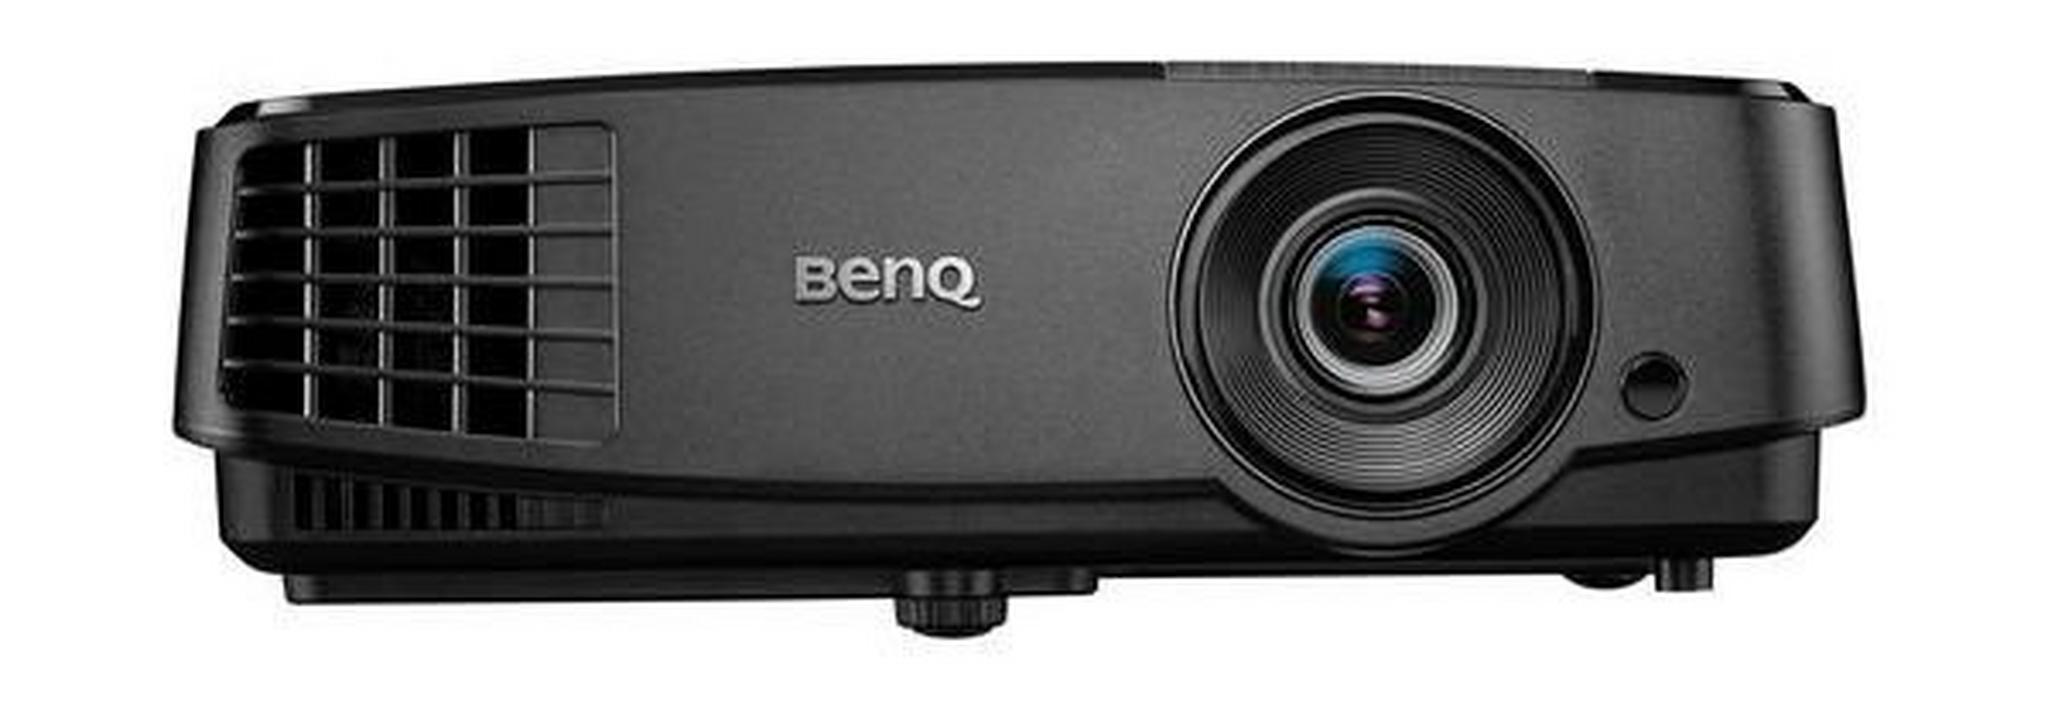 BenQ MS506 SVGA 3200 Lumens Projector (800 x 600) - Black